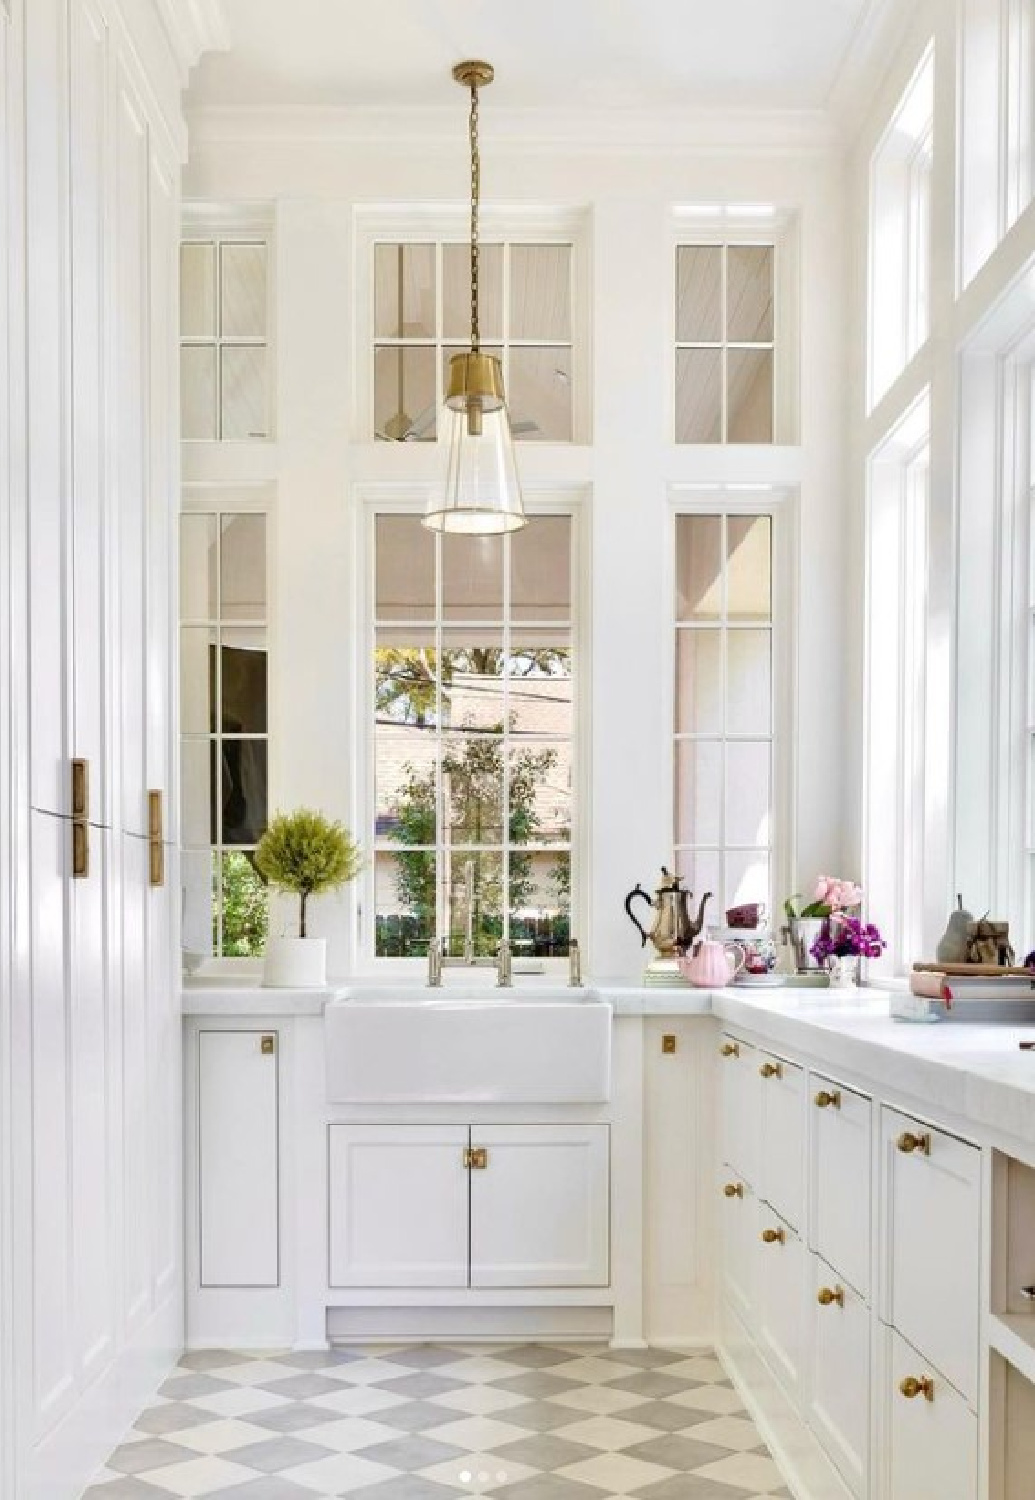 Breathtaking white kitchen pantry with checkered floors and farm sink - Holly Bell Design. #kitchenpantry #whitekitchendesign #coastalgrandmother